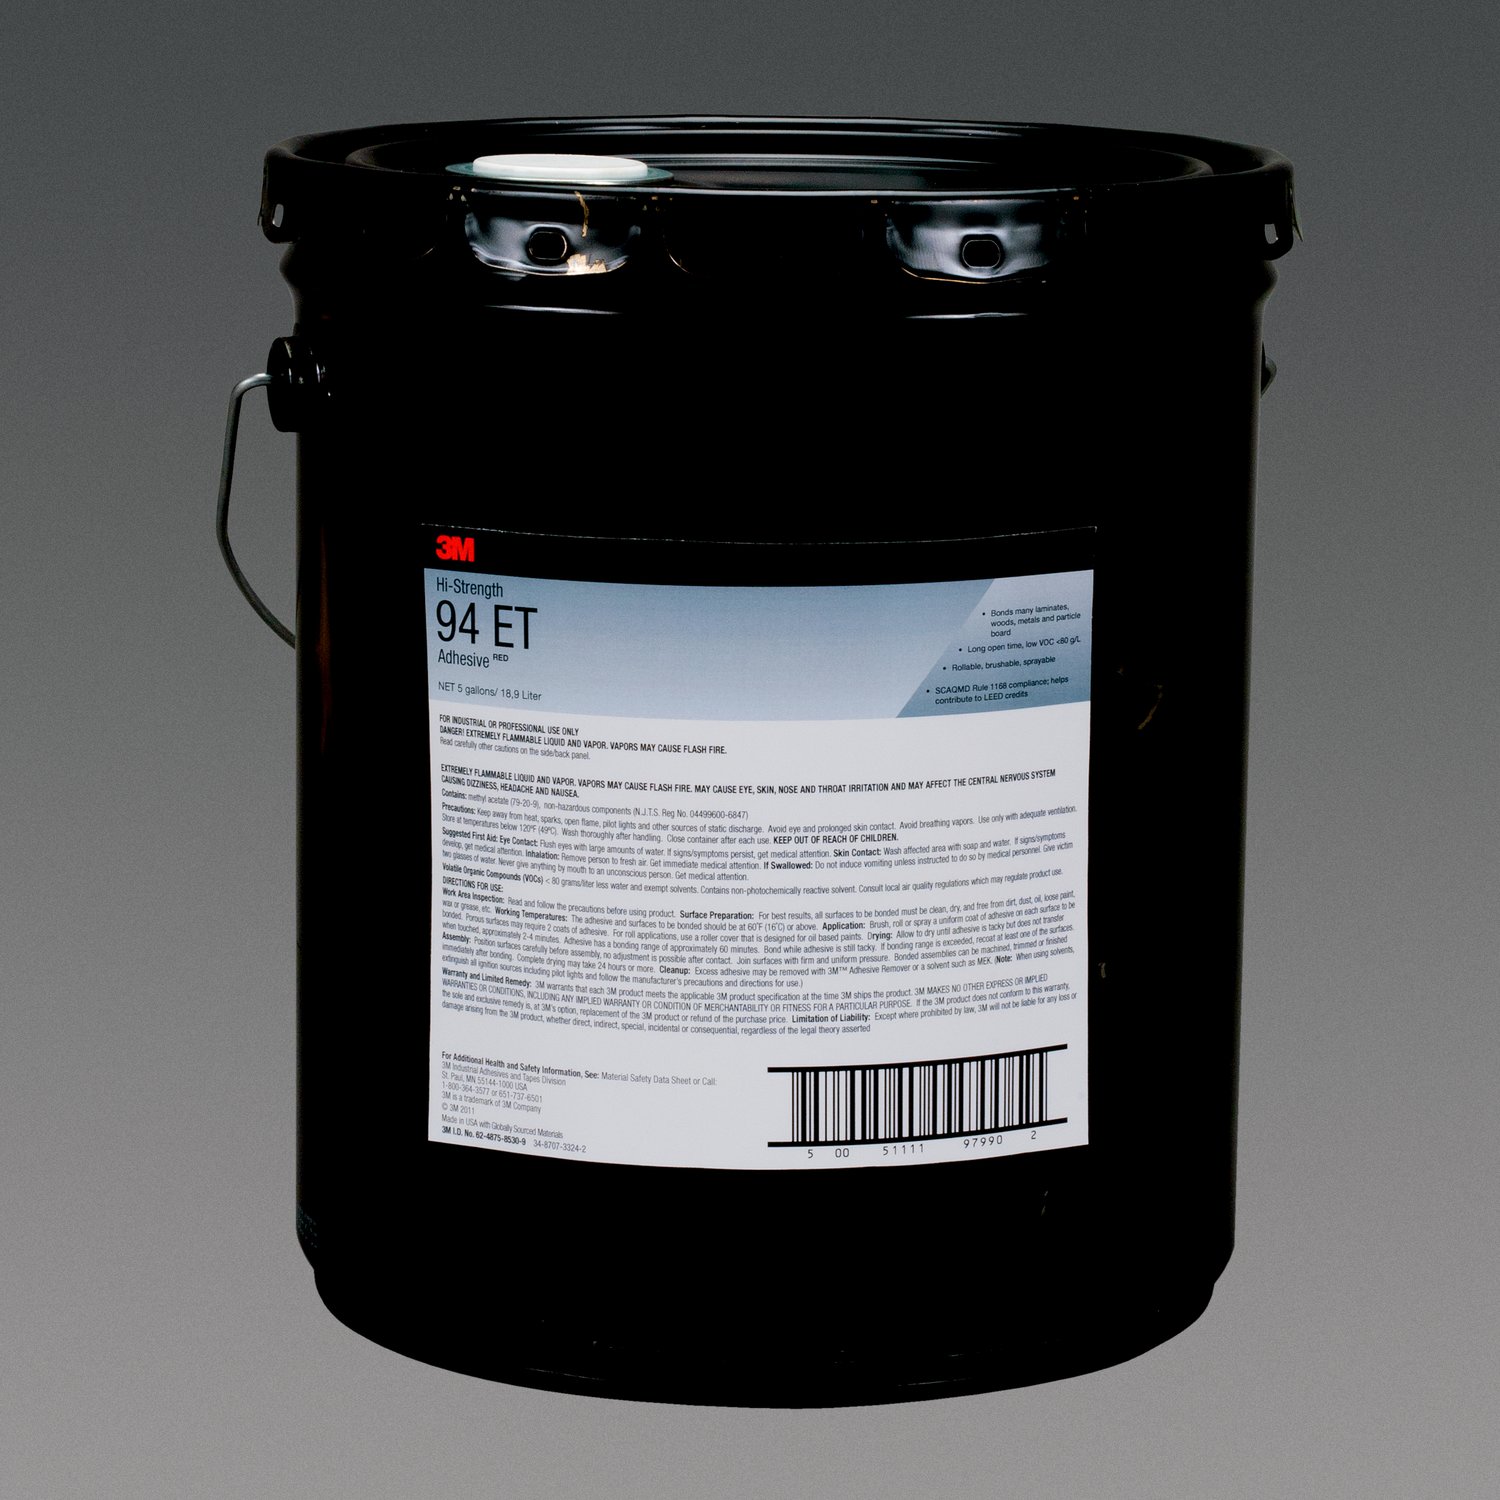 7100138383 - 3M Hi-Strength 94 ET Adhesive, Red, 5 Gallon Drum (Pail)